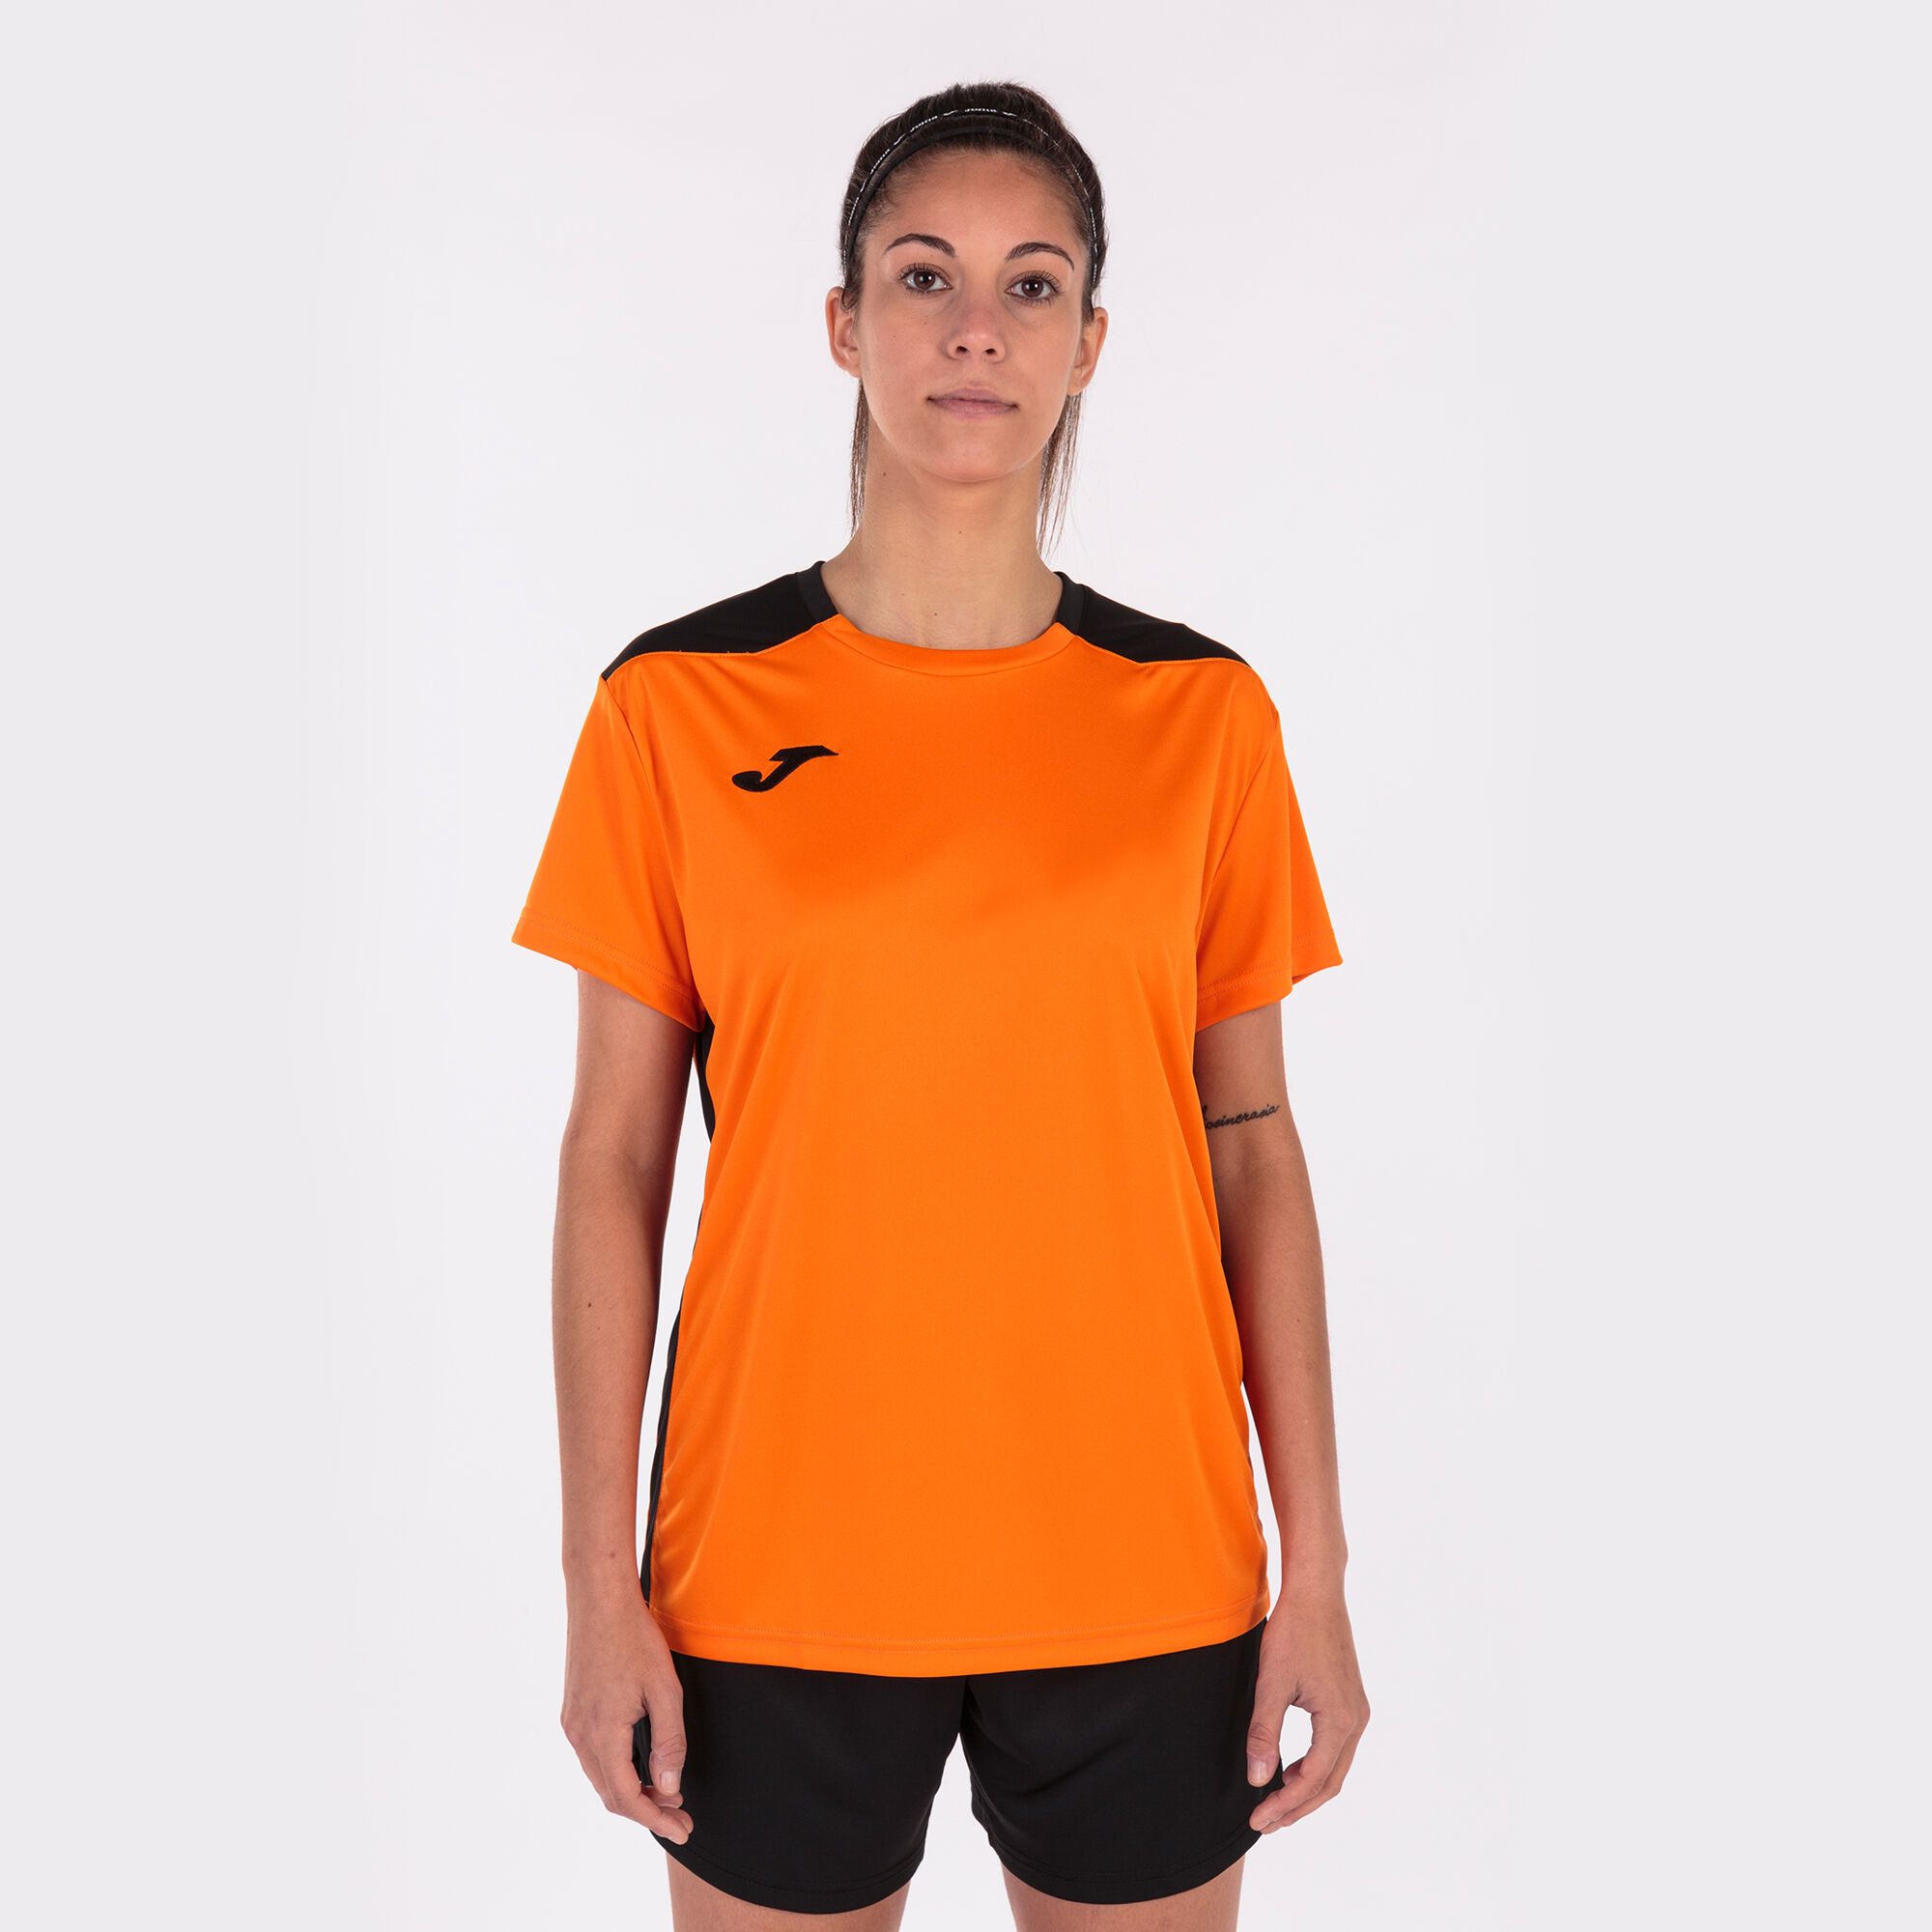 Camiseta manga corta mujer Championship VI naranja negro